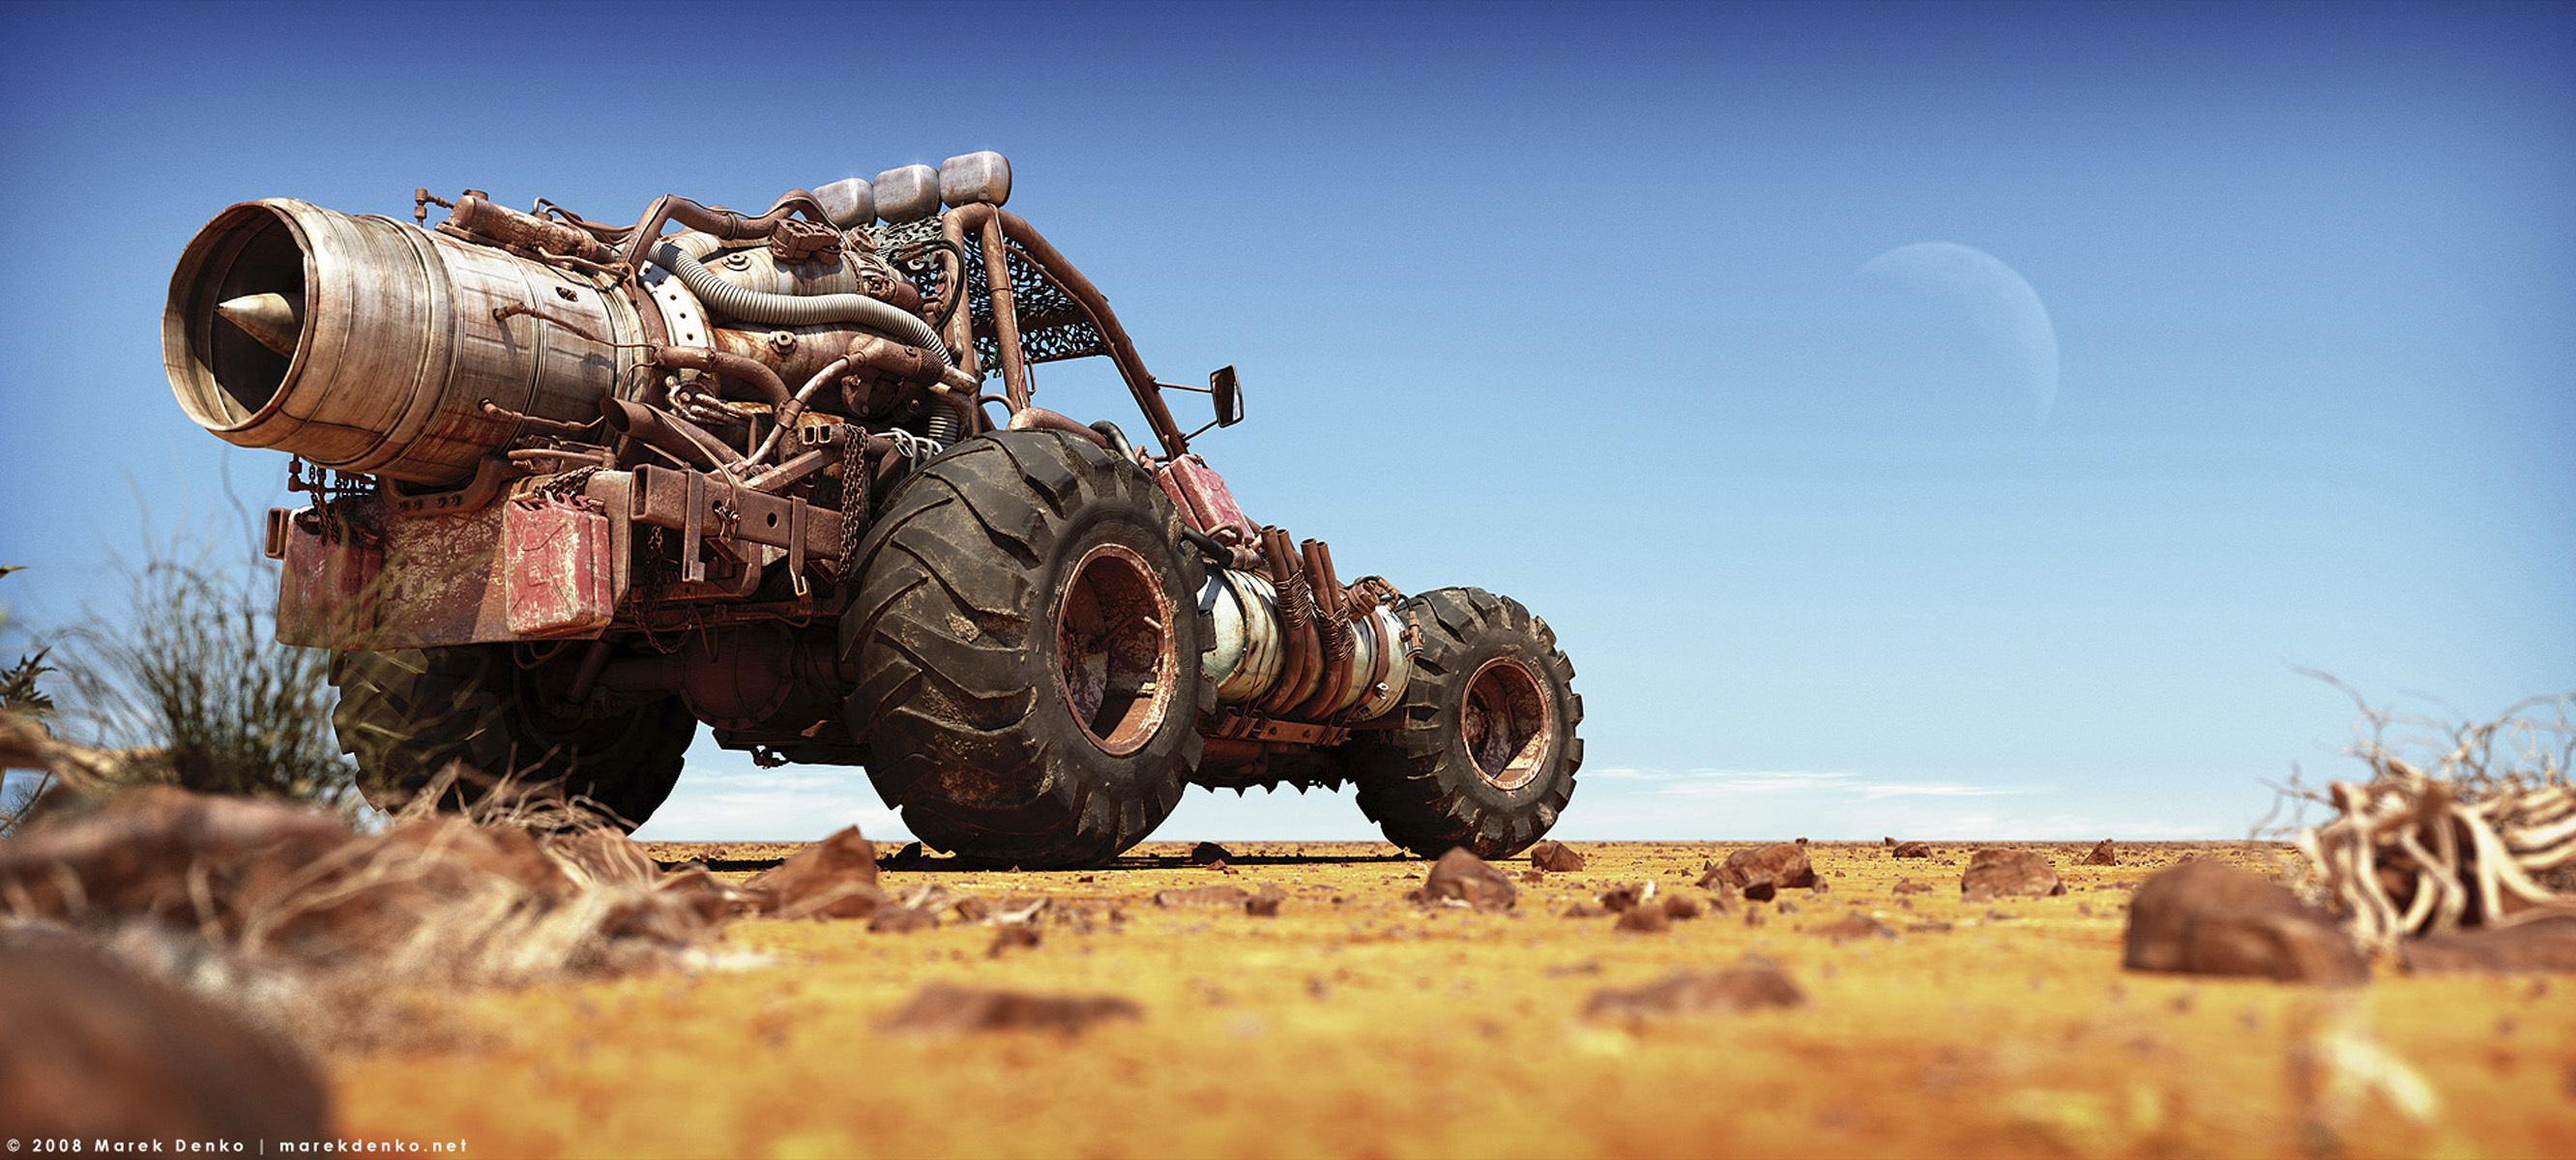 Wallpaper Mad Max, graphics, desert, buggy desktop wallpaper 3D